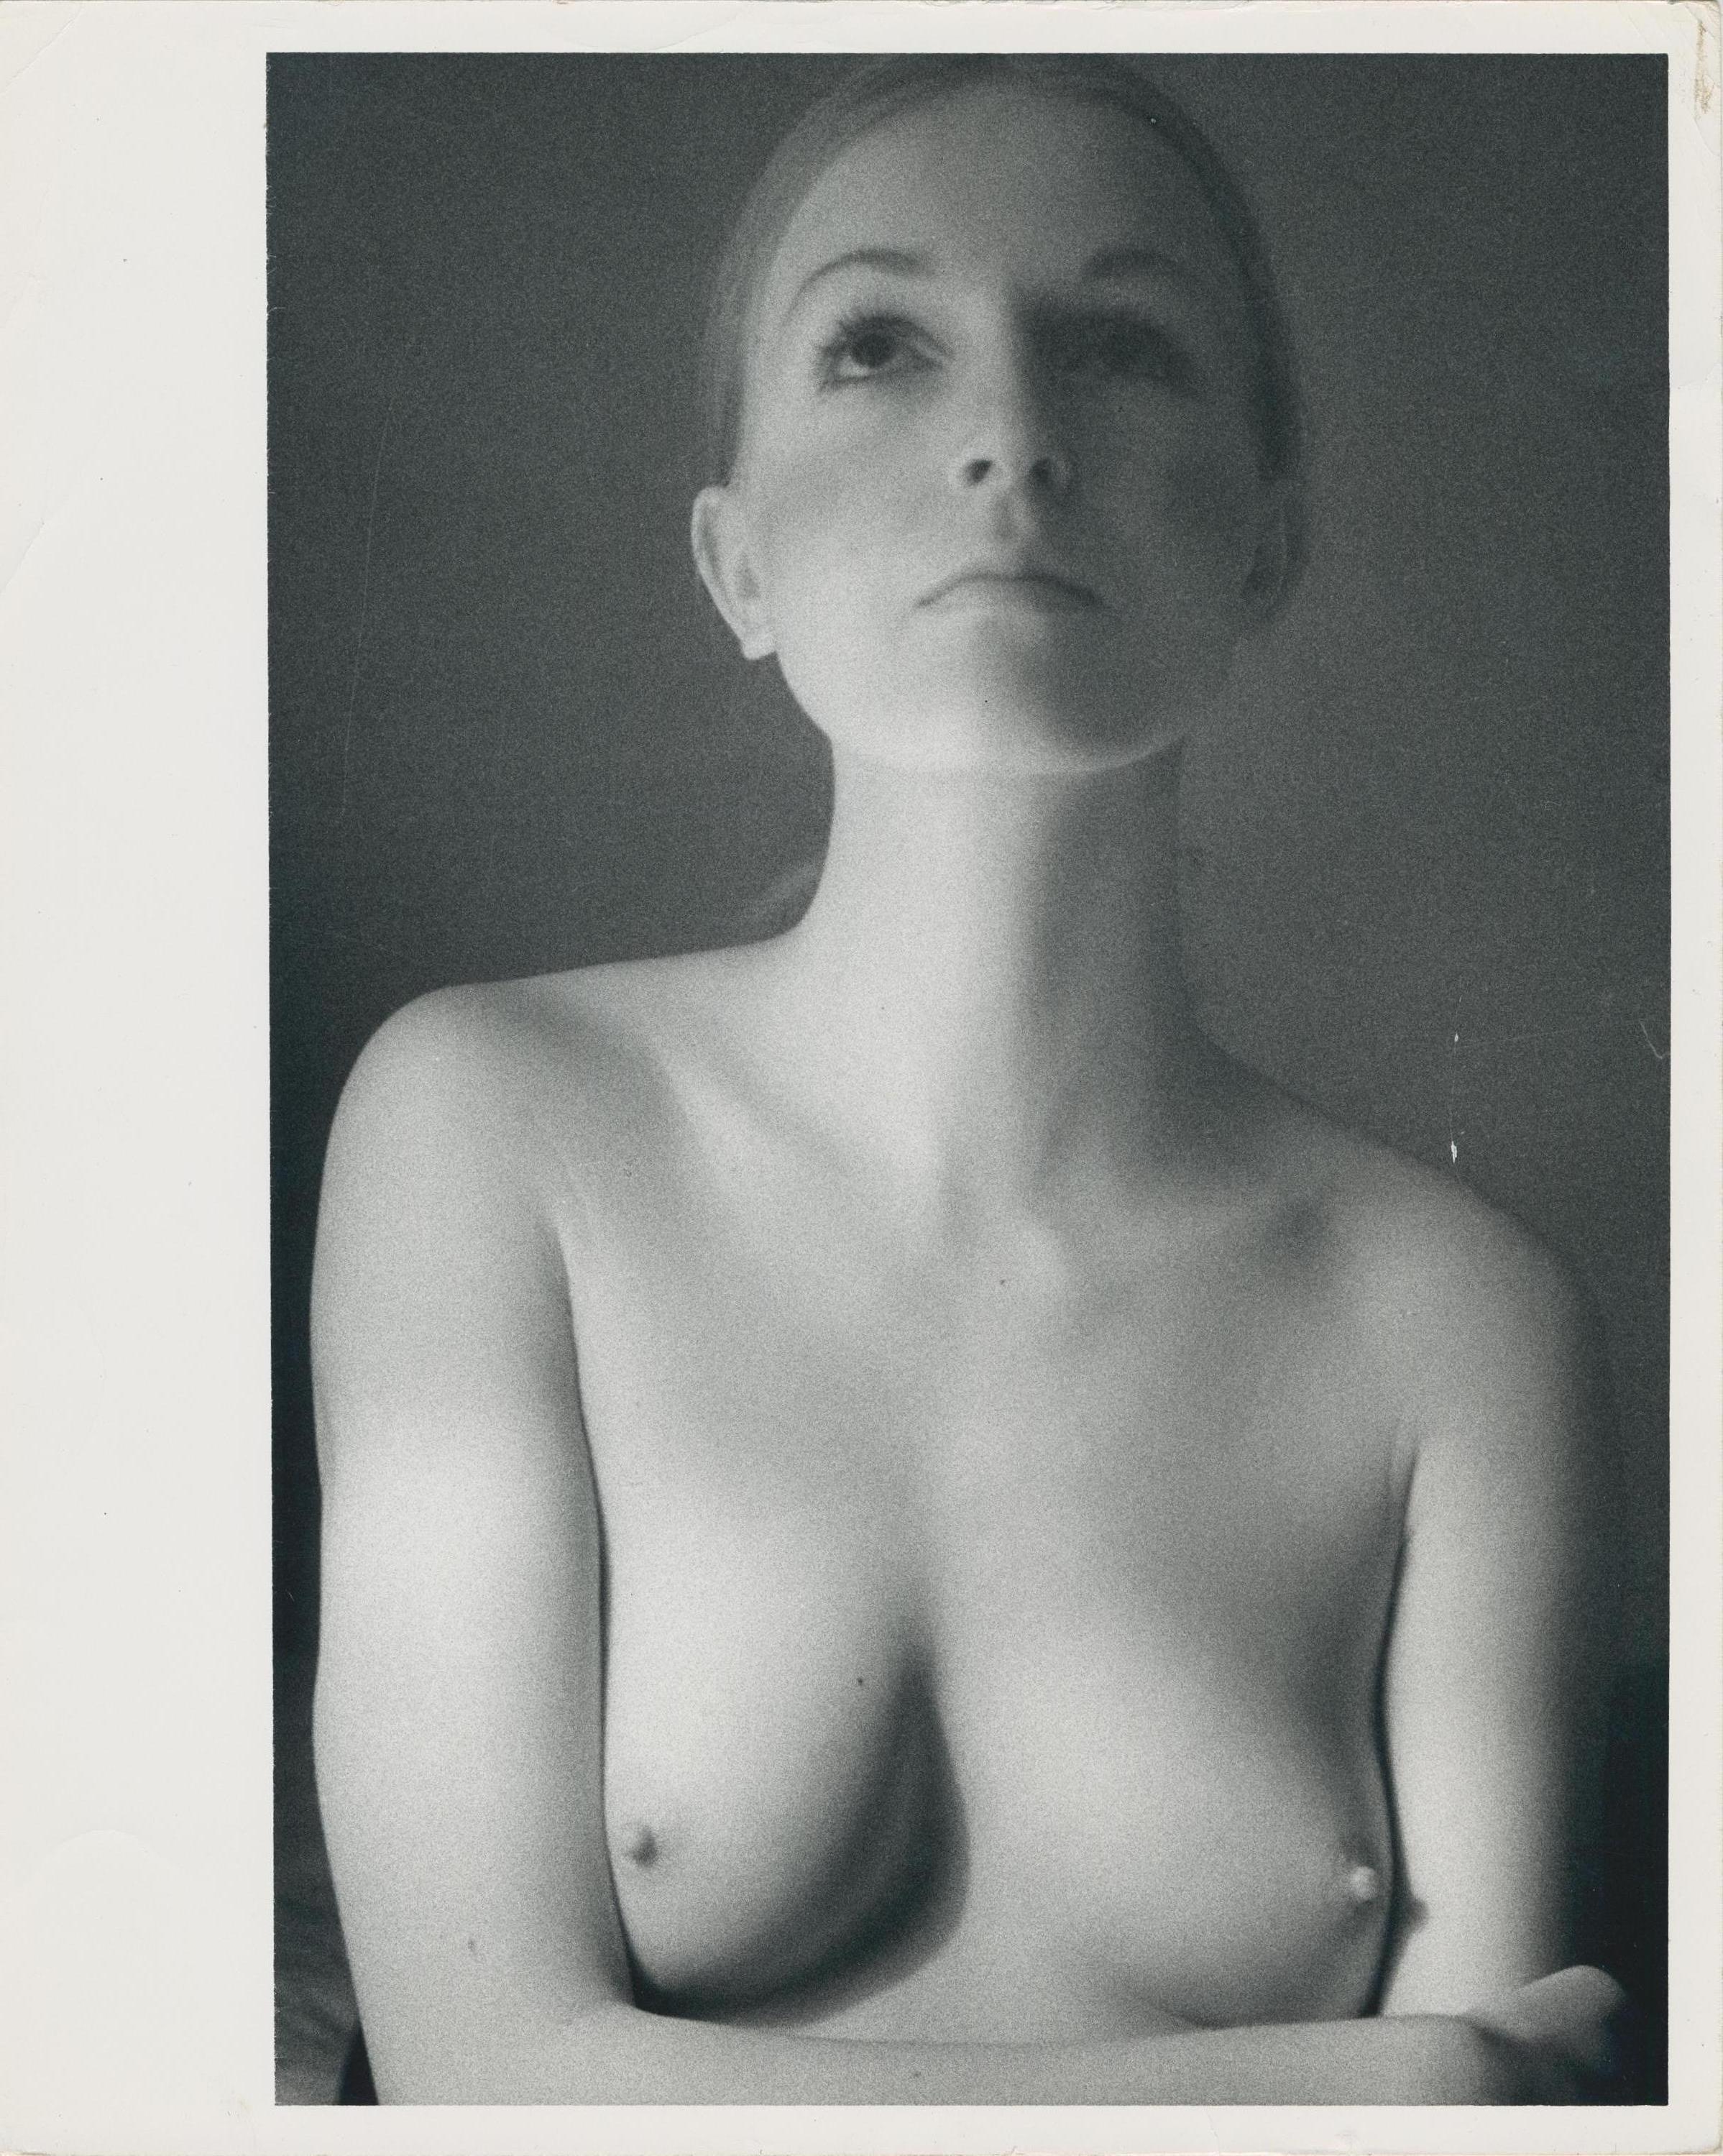 David Schoen Nude Photograph - Nude Portrait, Body, Black and White Photography , 20, 4 x 15, 3 cm